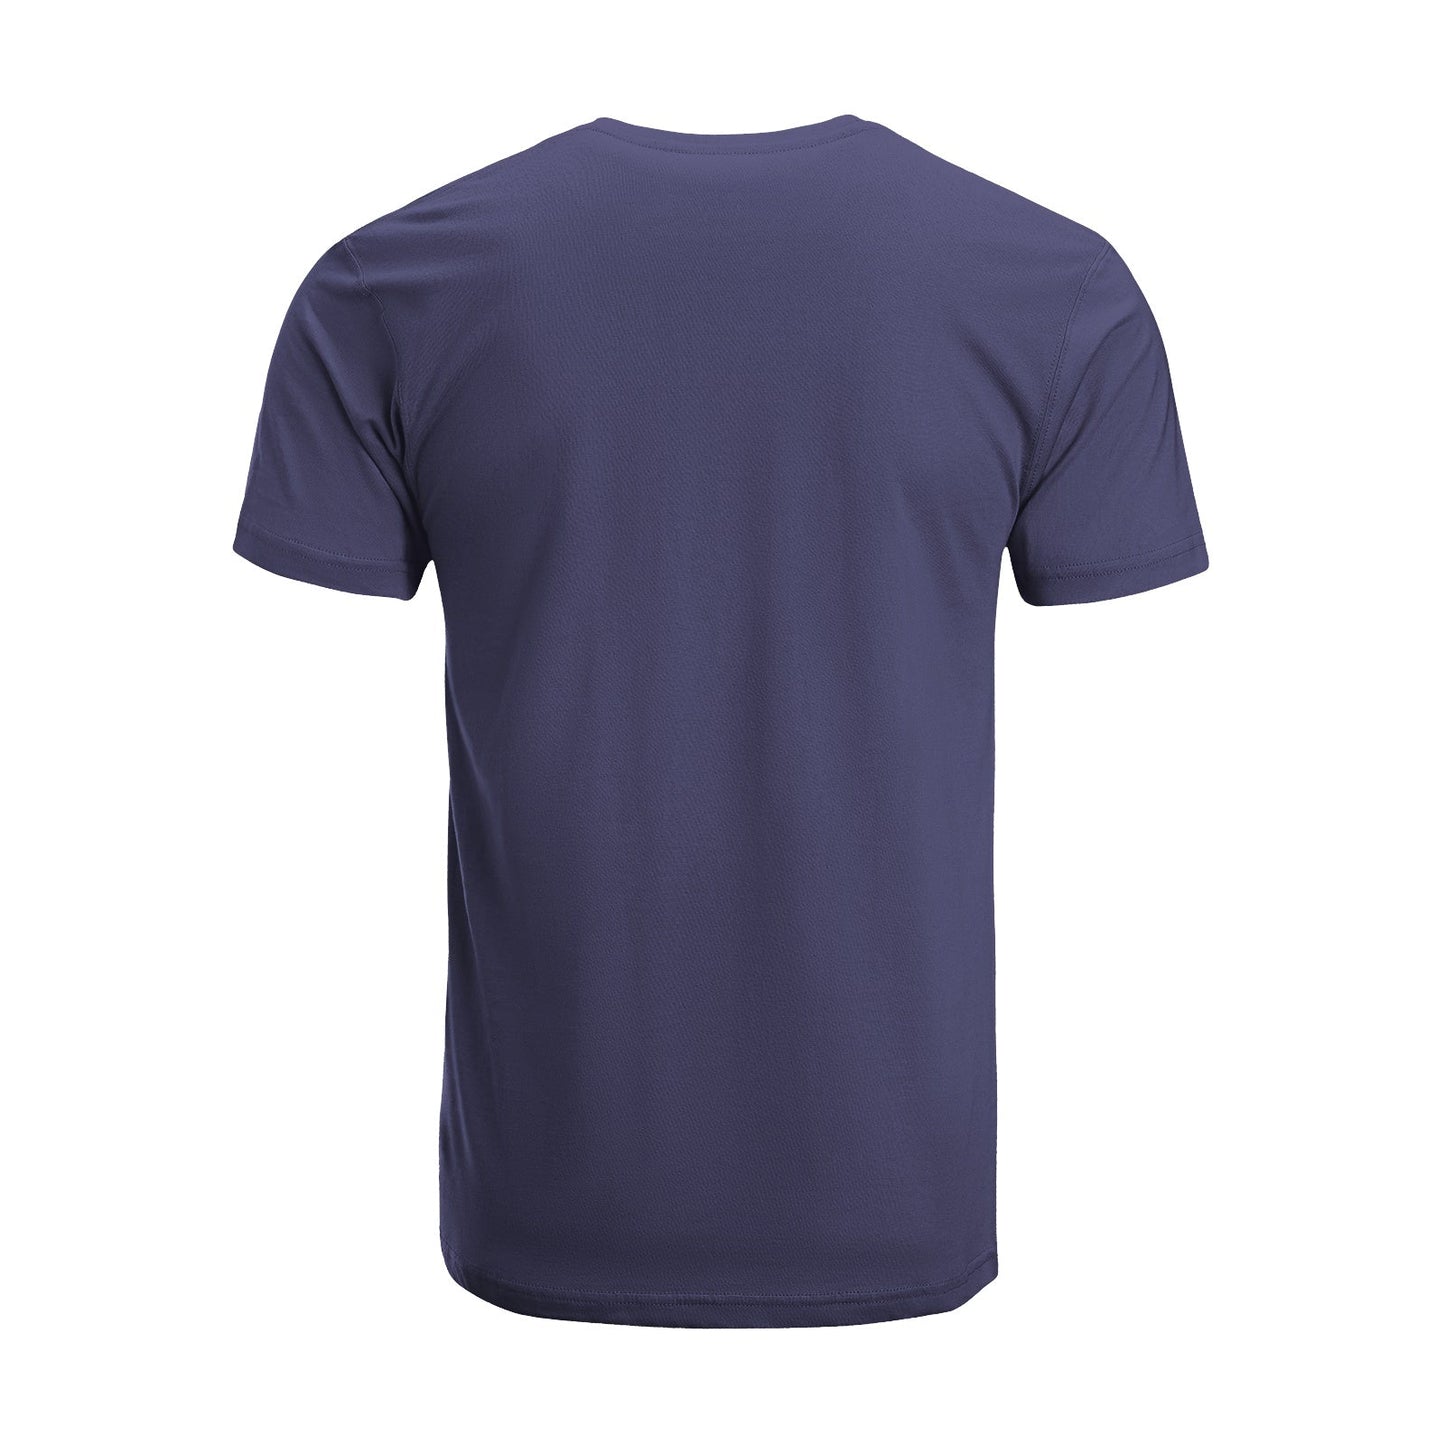 Unisex Short Sleeve Crew Neck Cotton Jersey T-Shirt DOG 08 - Tara-Outfits.com